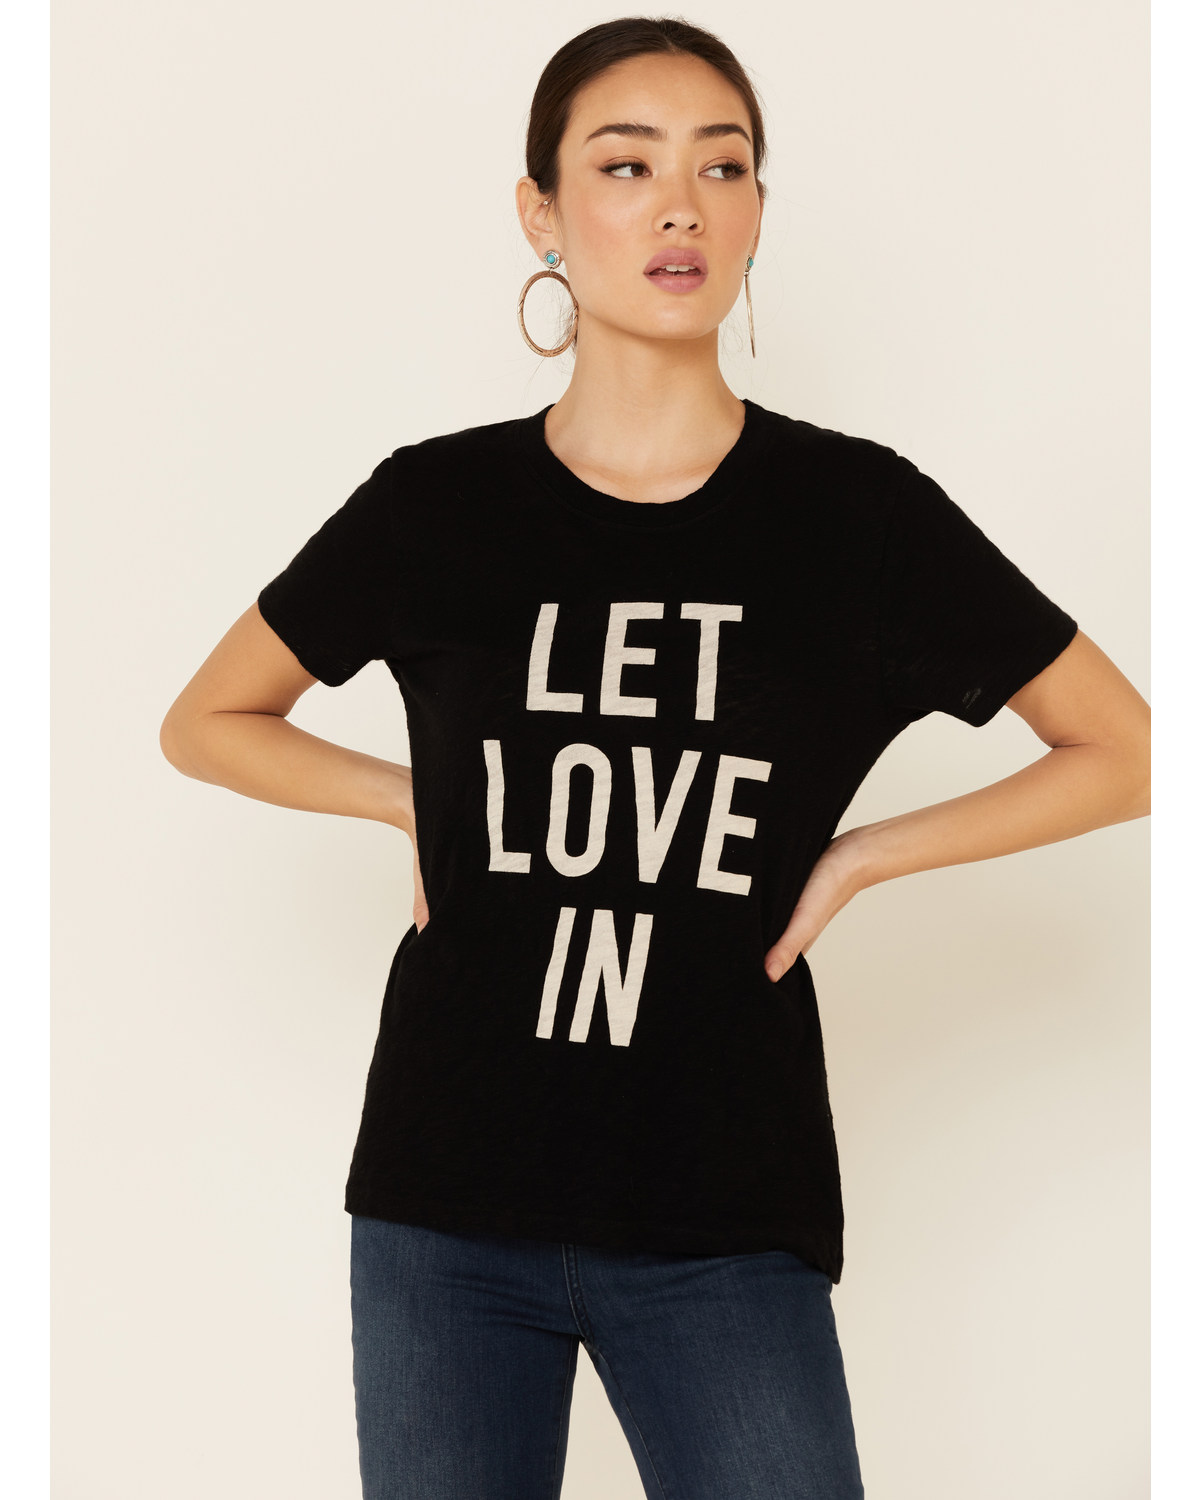 Revel Women's Let Love Graphic Slub Short Sleeve Tee